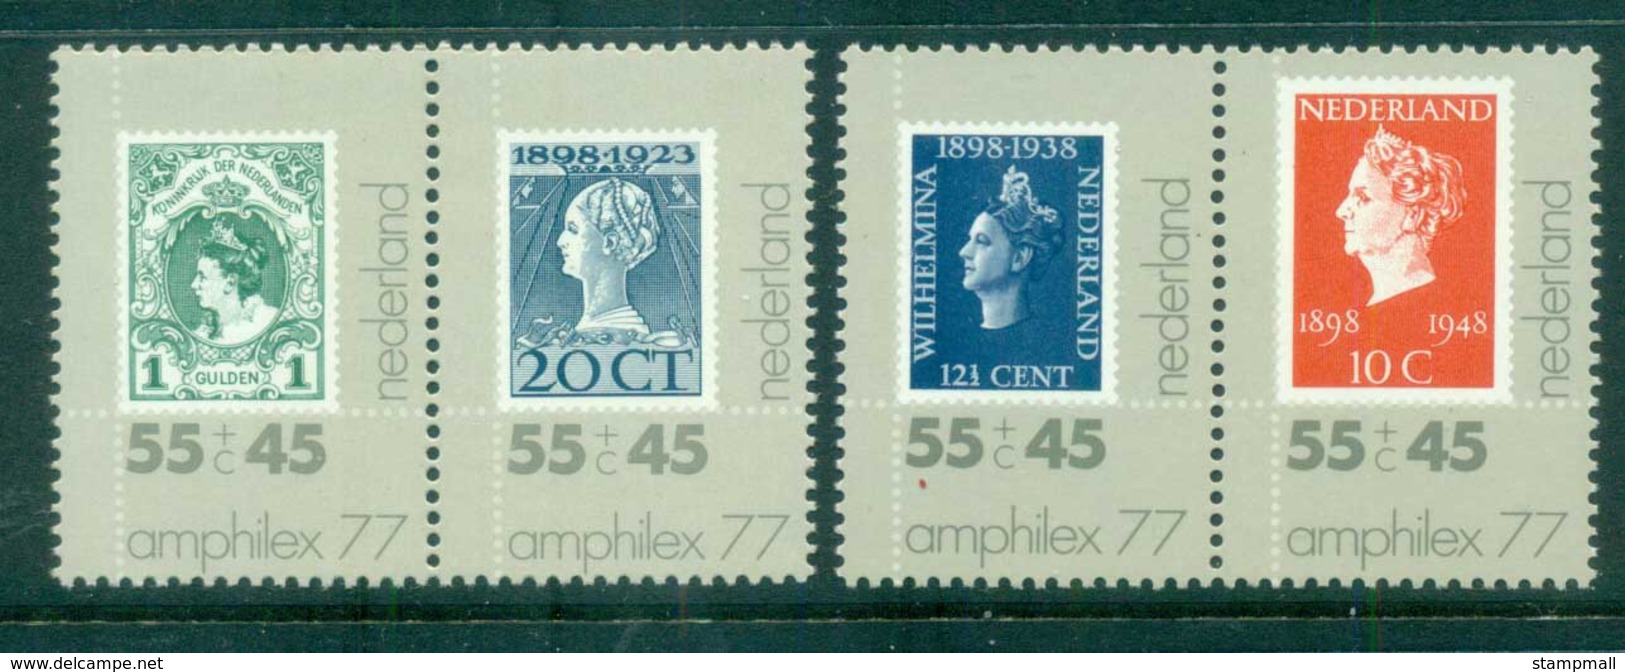 Netherlands 1977 Charity, Amphilex Stamp Ex. Prs MUH Lot76591 - Unclassified